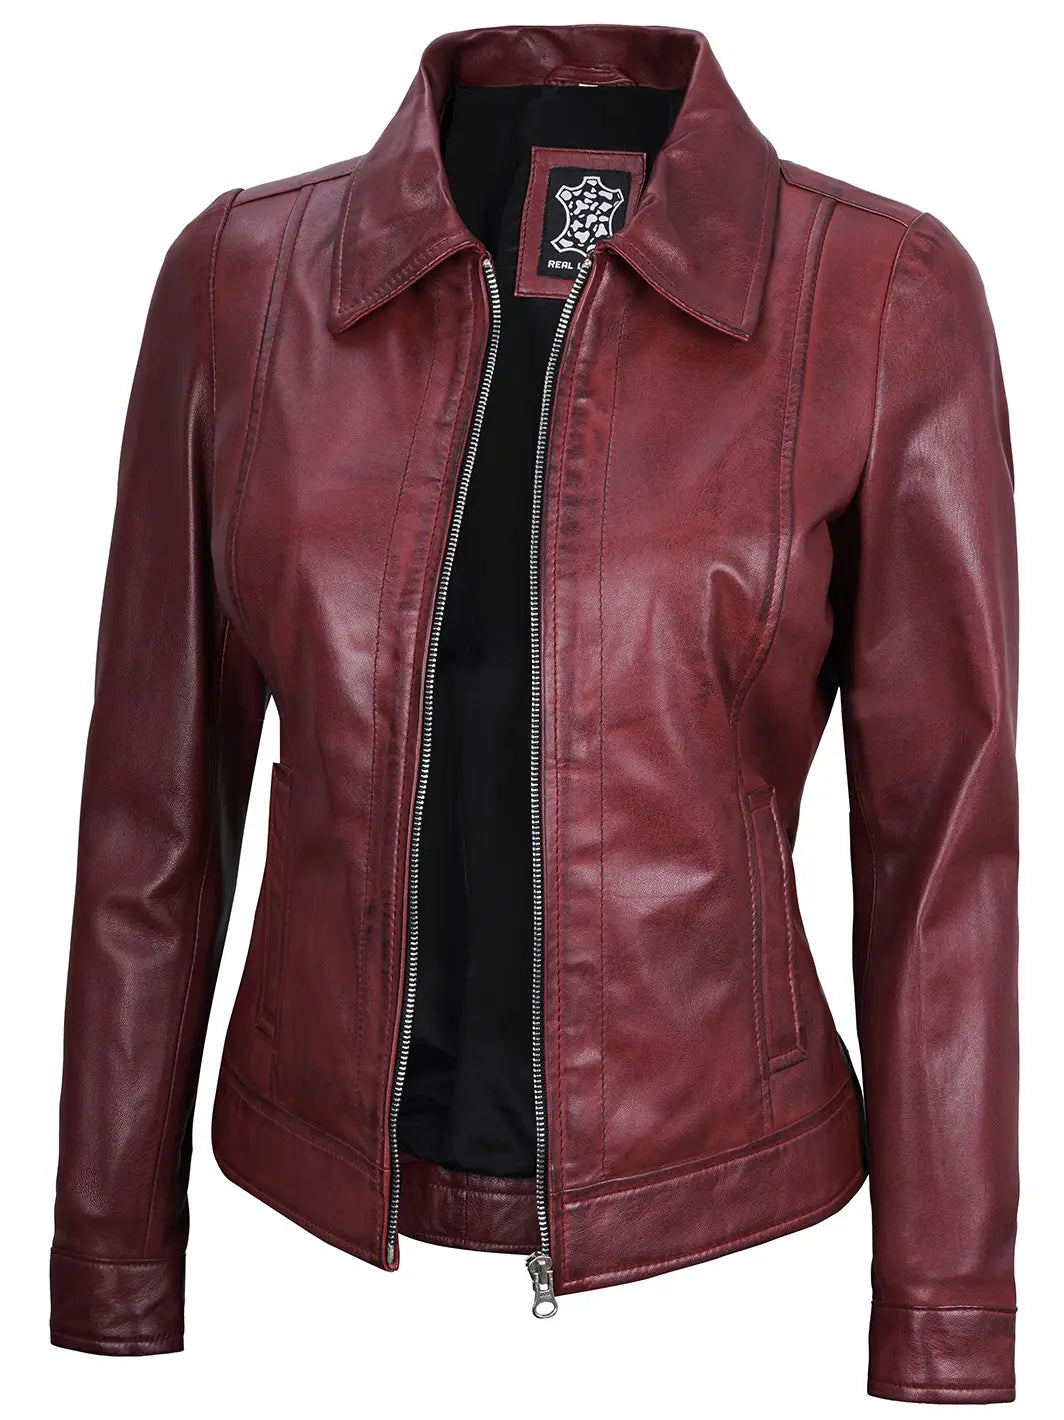 Womens leather jacket maroon